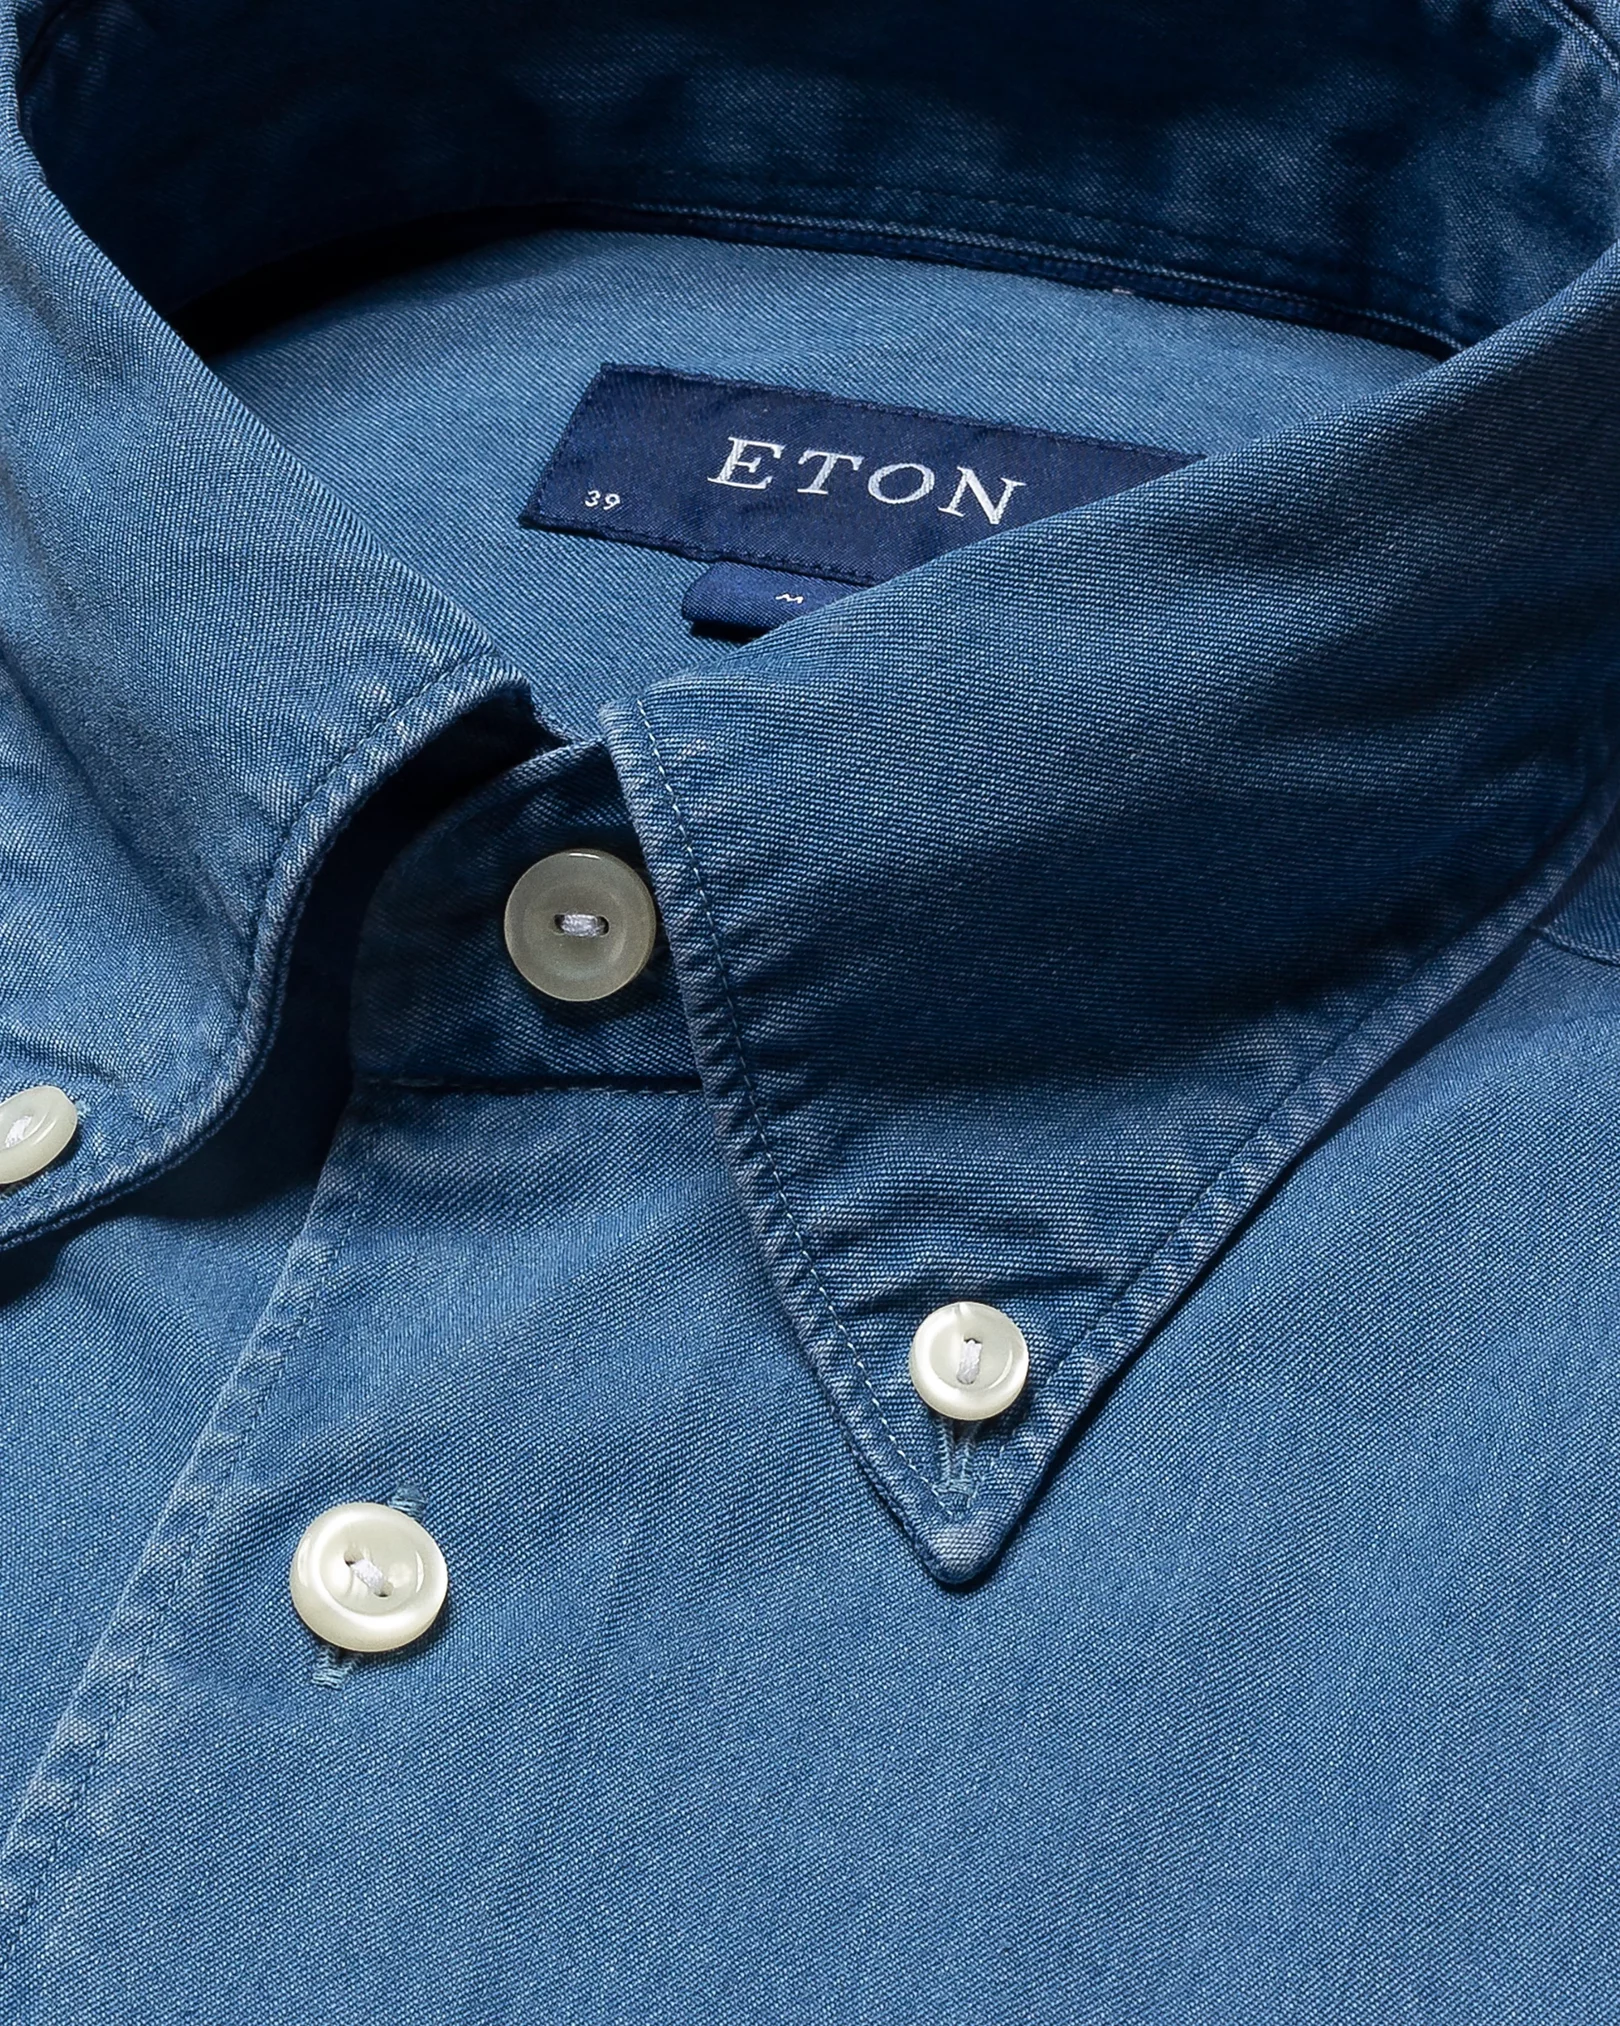 Eton - mid blue lightweight denim shirt button down